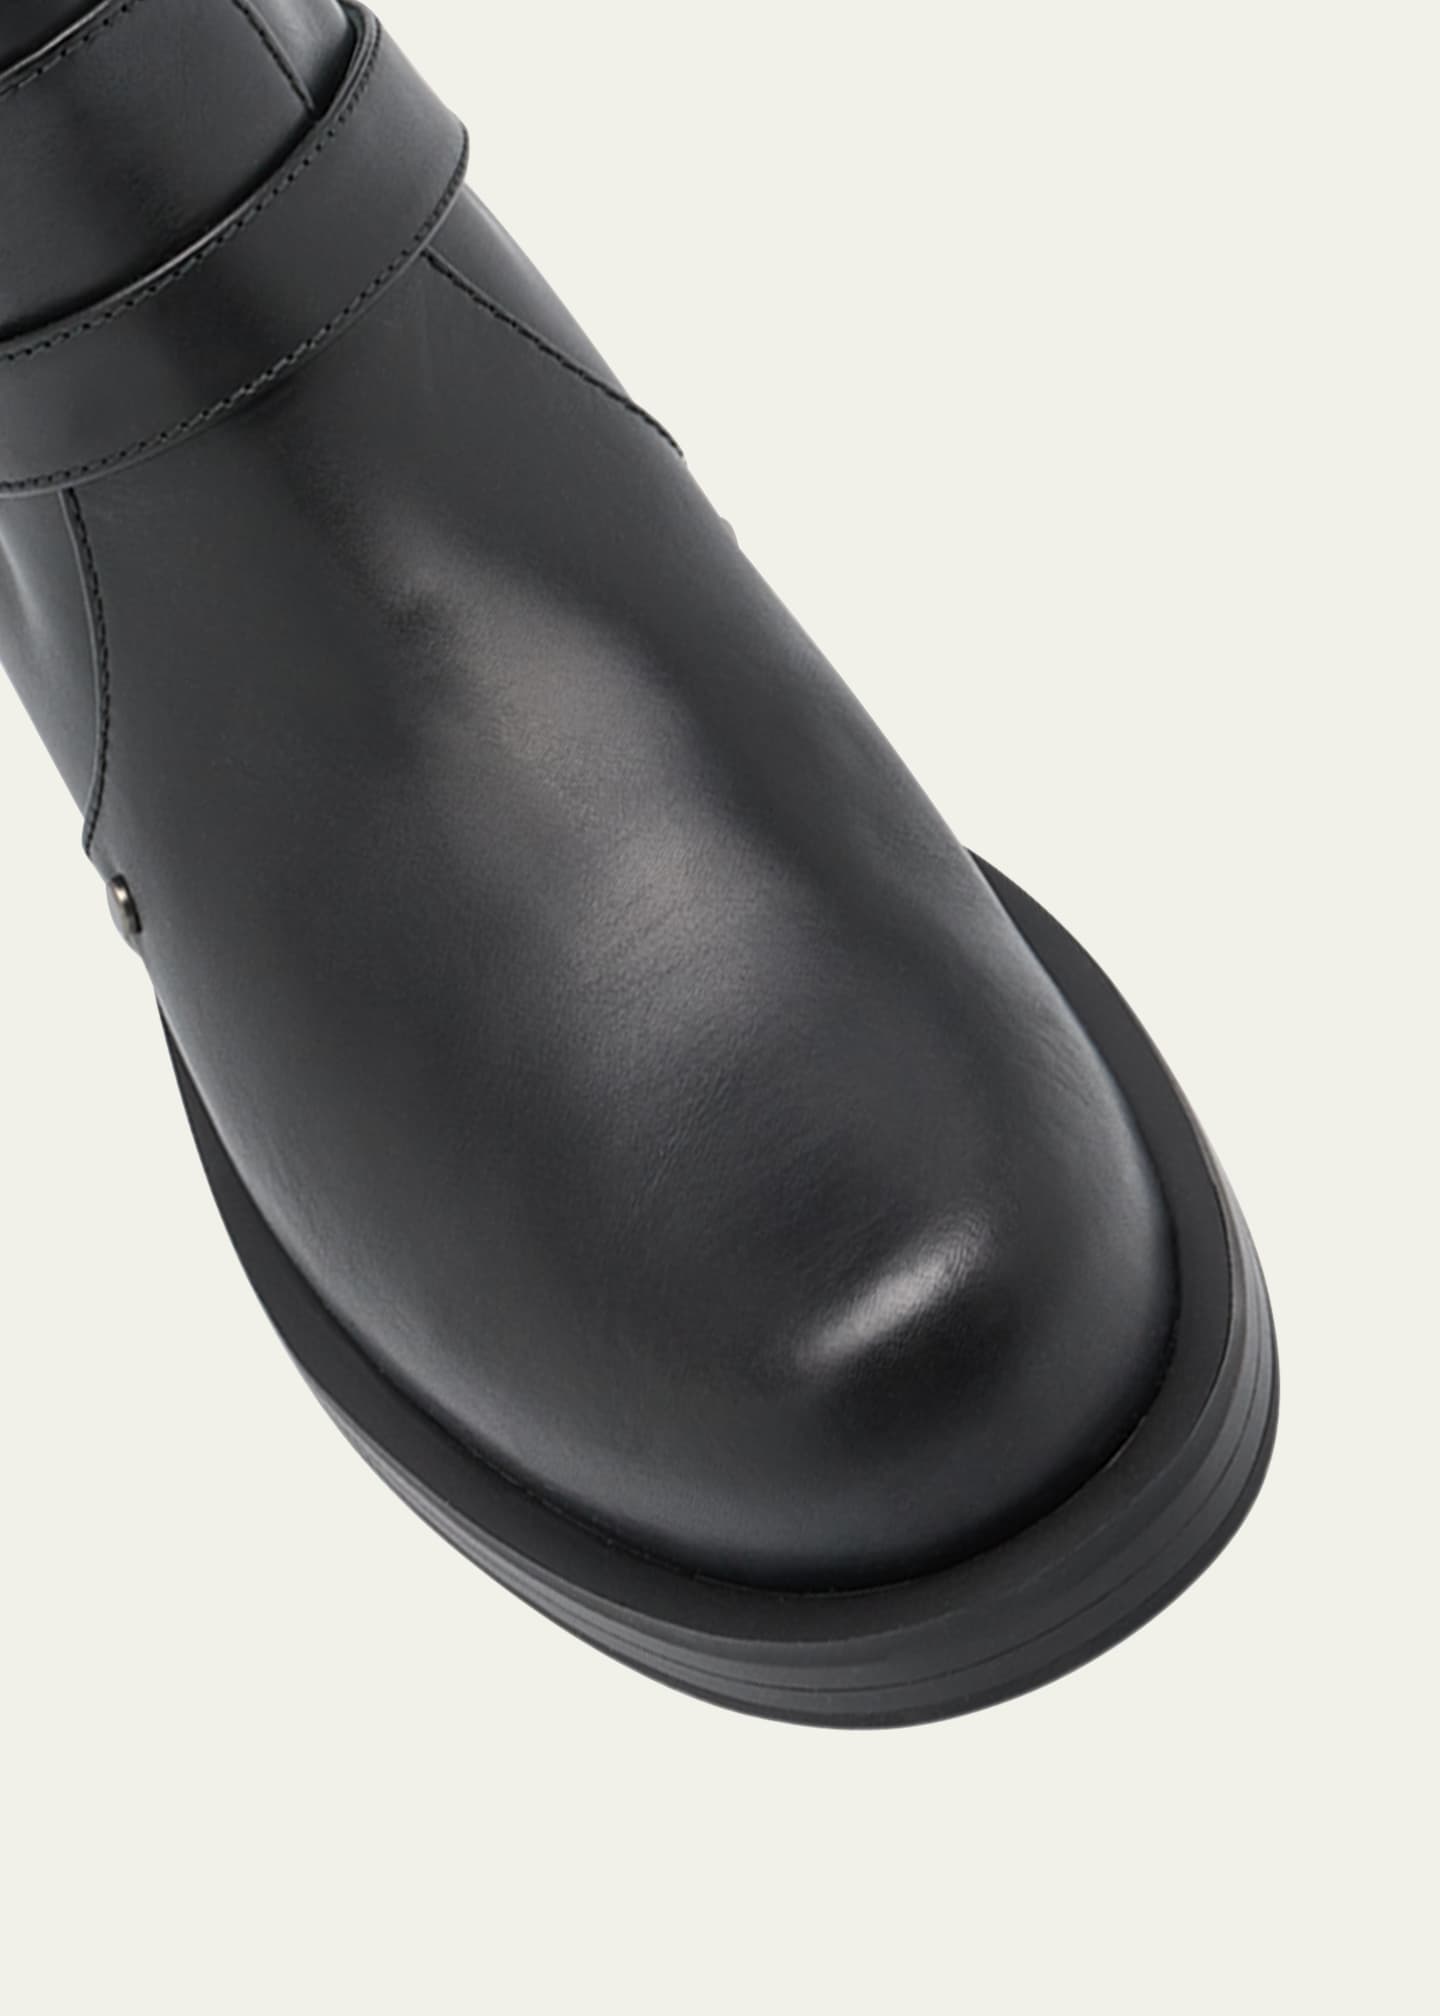 Stuart Weitzman Women's Maverick 40mm Leather Booties - Black - Size 8